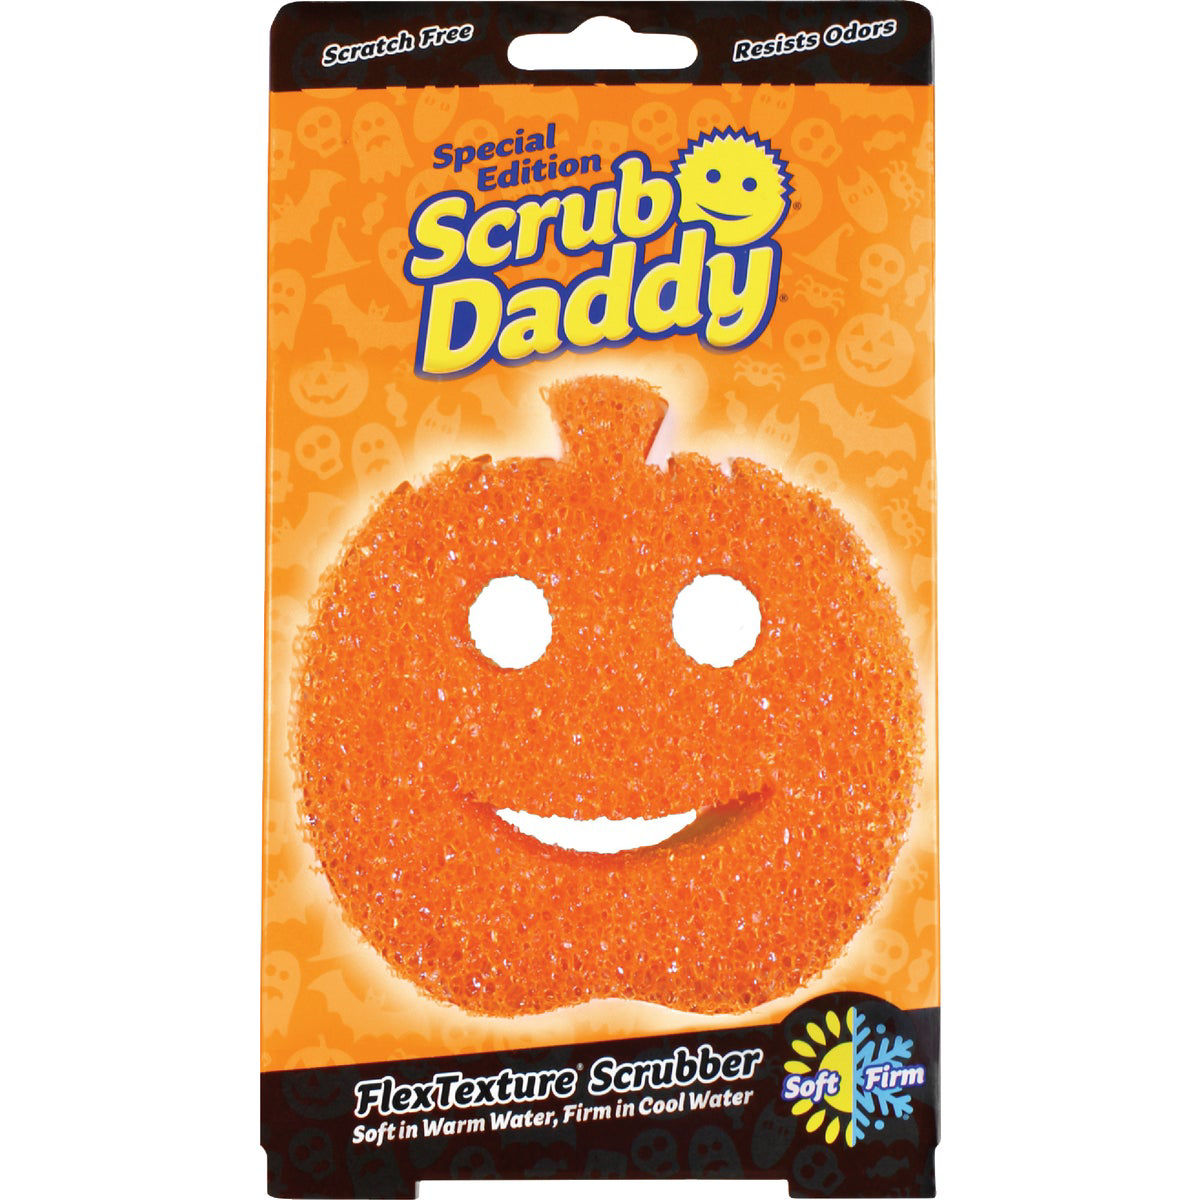 Scrub Daddy Special Edition Flextexture Scrubber : Target